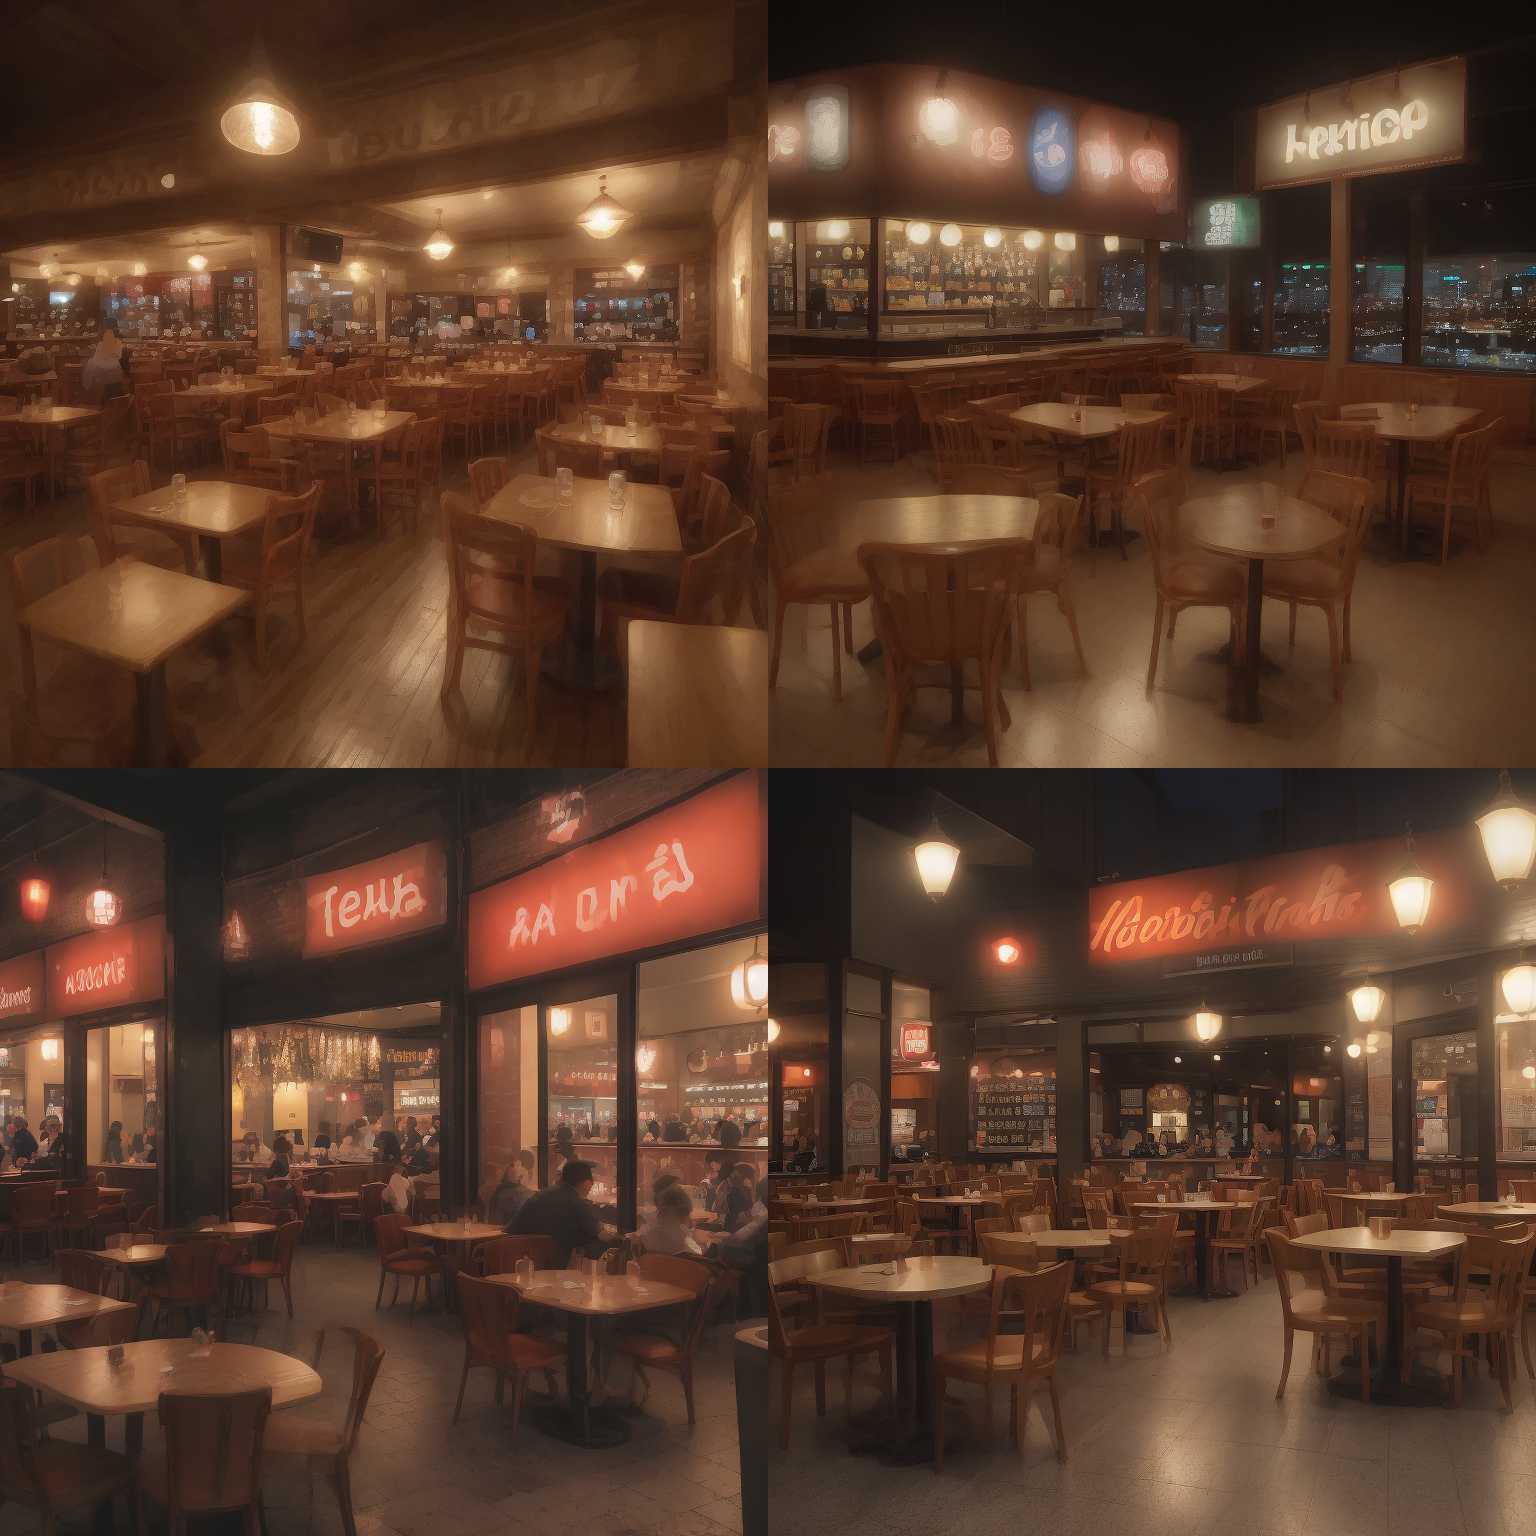 A popular restaurant after closing hours